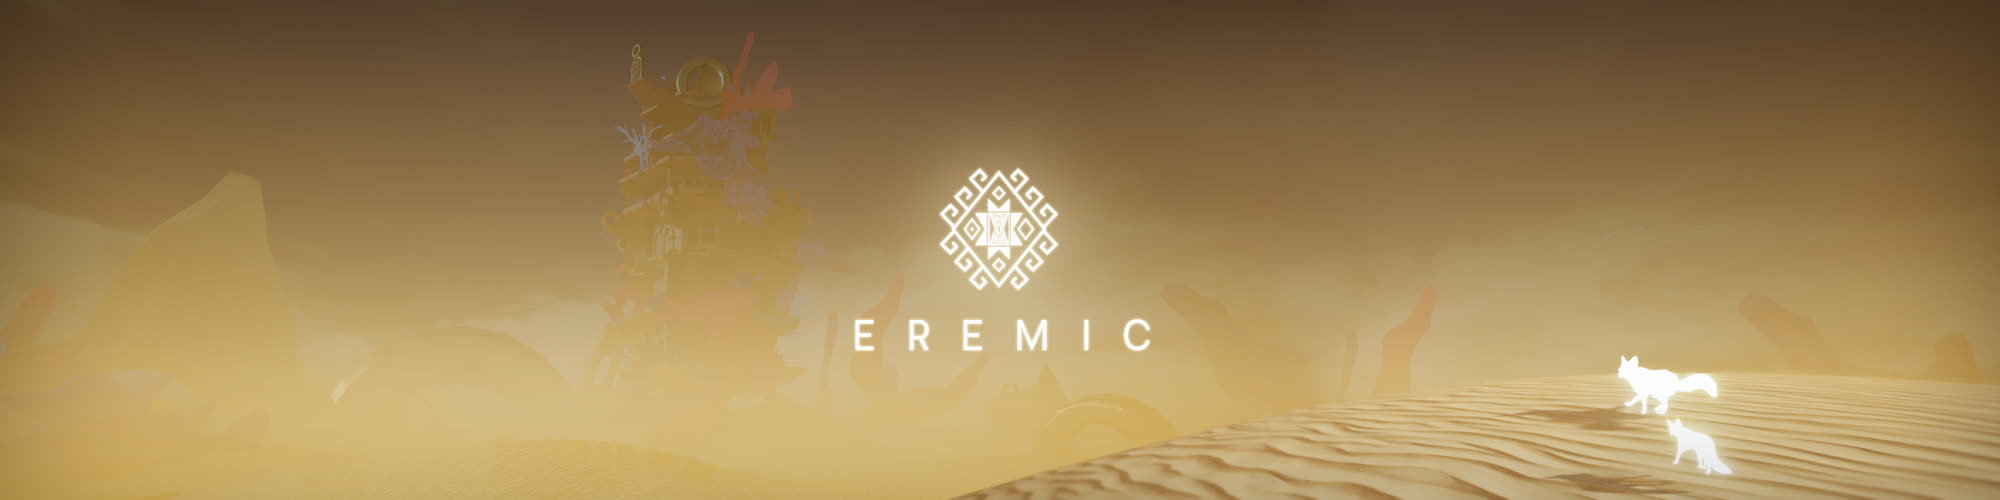 EREMIC (Game Jam Demo)